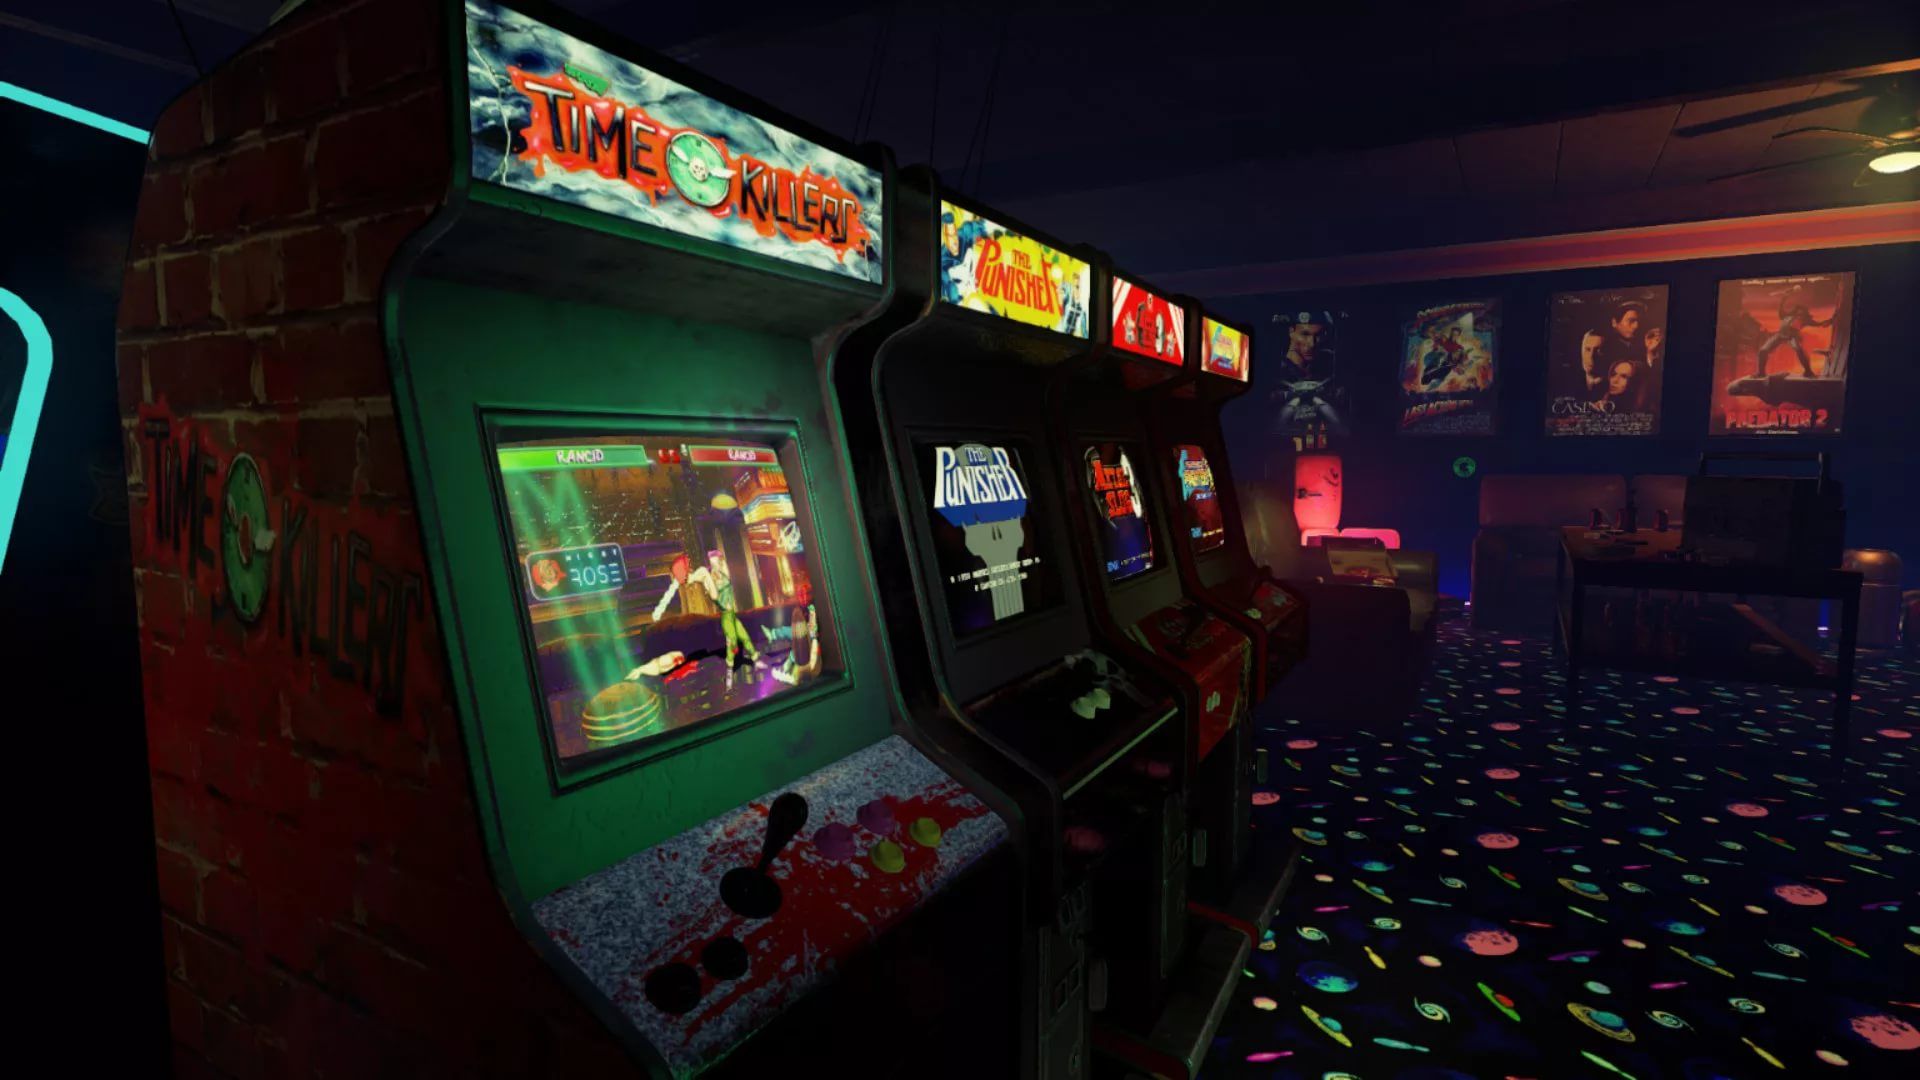 Arcade Image